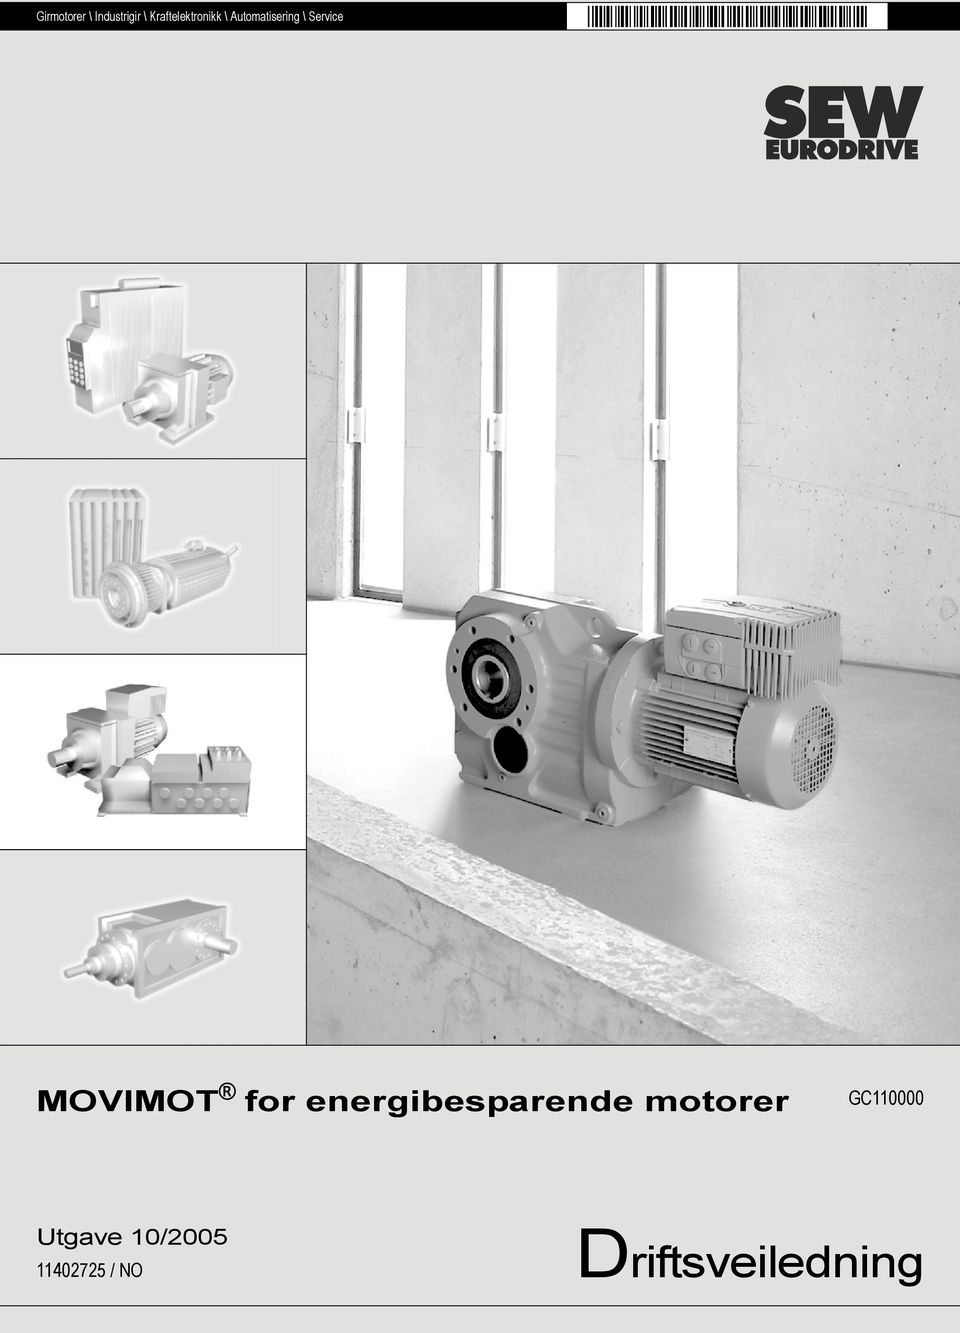 Service MOVIMOT for energibesparende